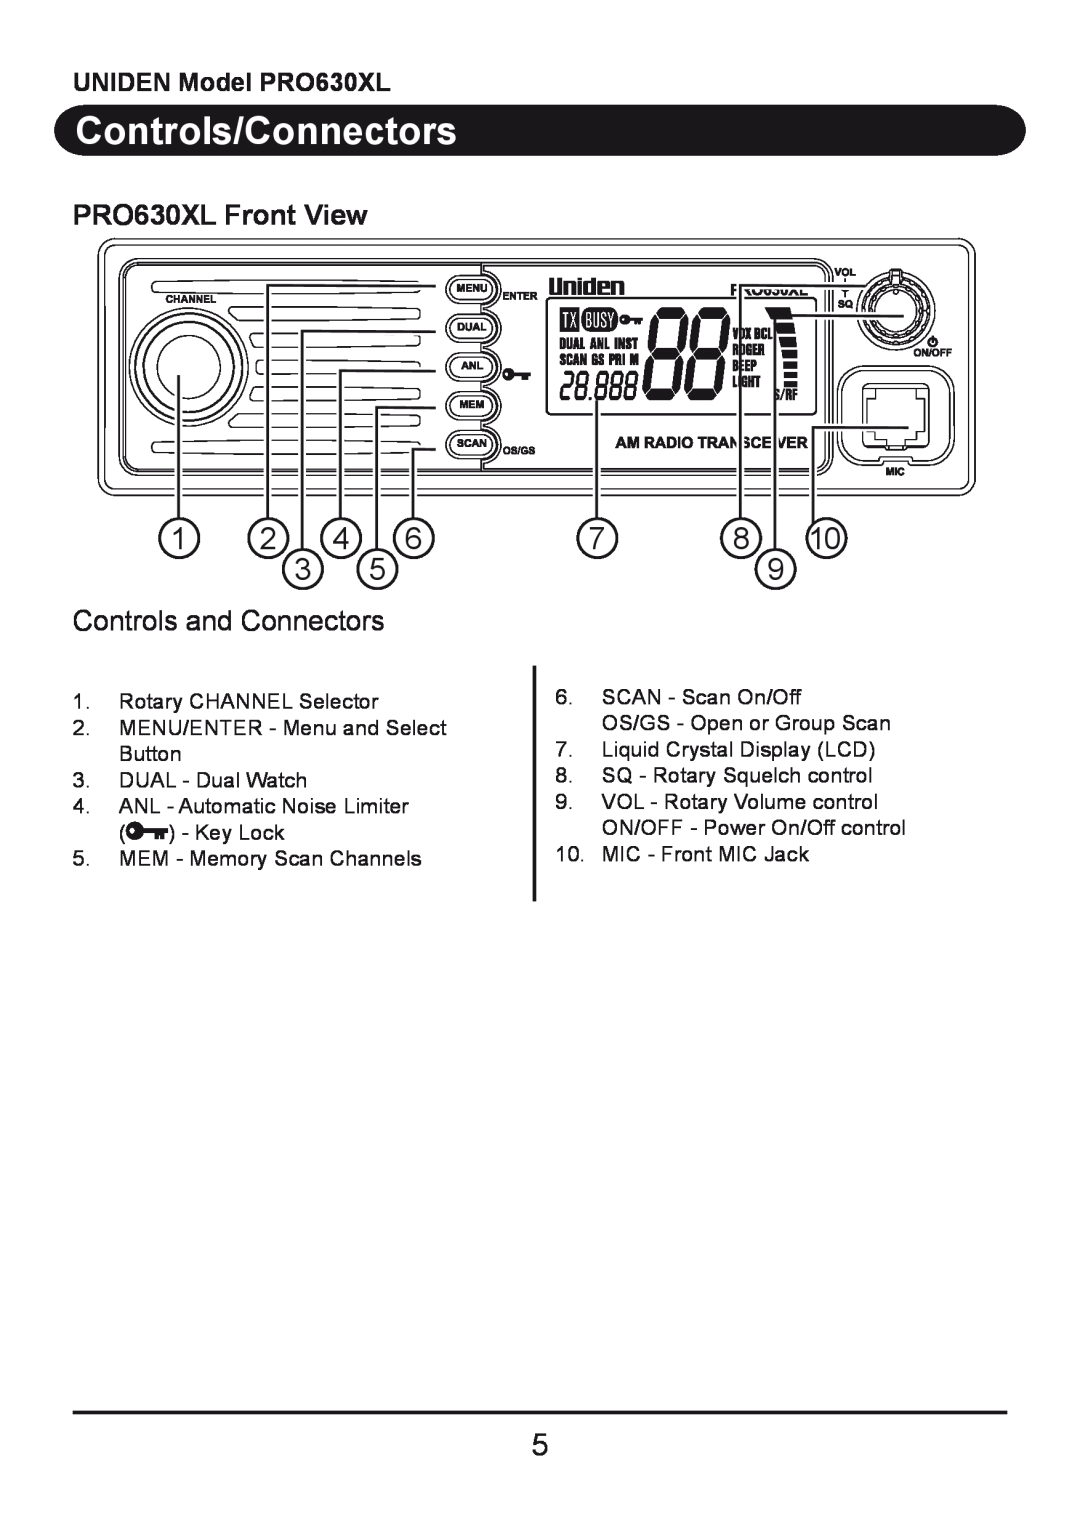 Uniden owner manual Controls/Connectors, PRO630XL Front View, Controls and Connectors, UNIDEN Model PRO630XL 